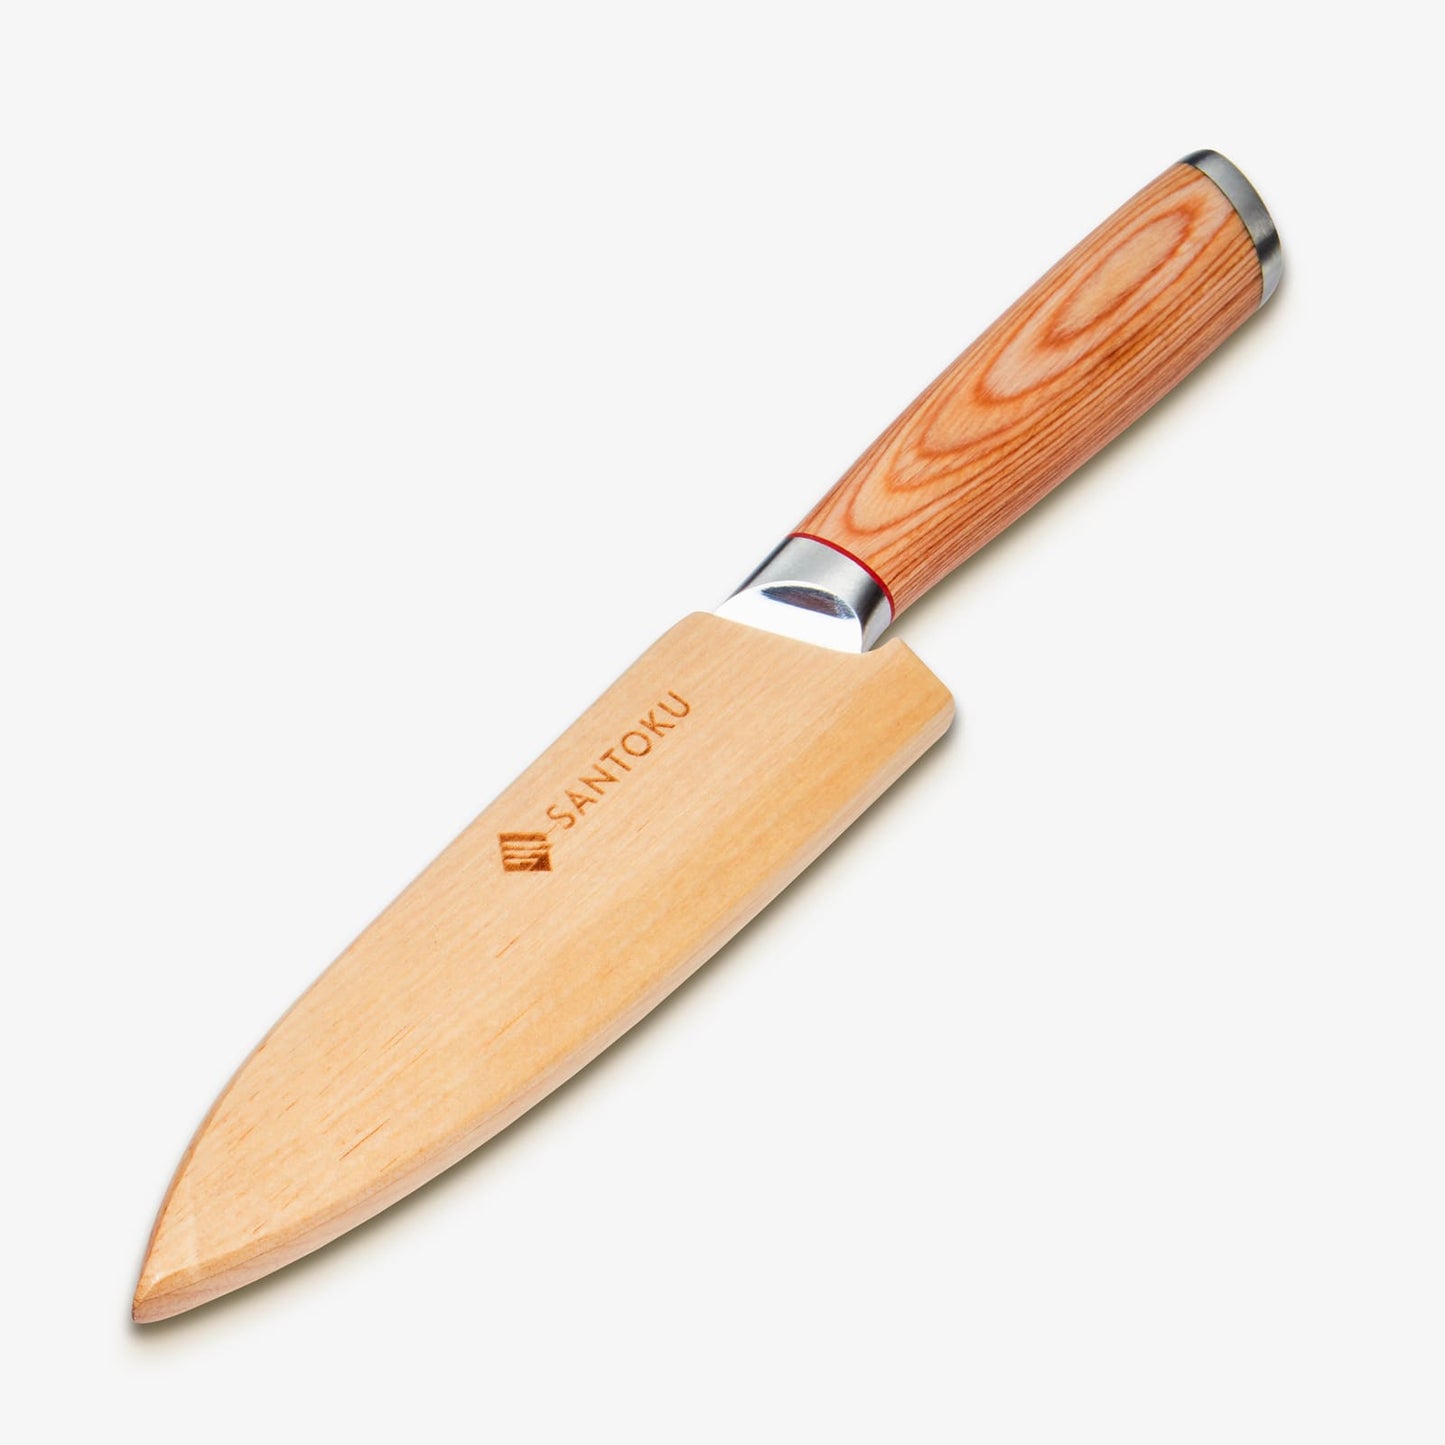 हरुता (はる た) 5 इंच उपयोगिता चाकू